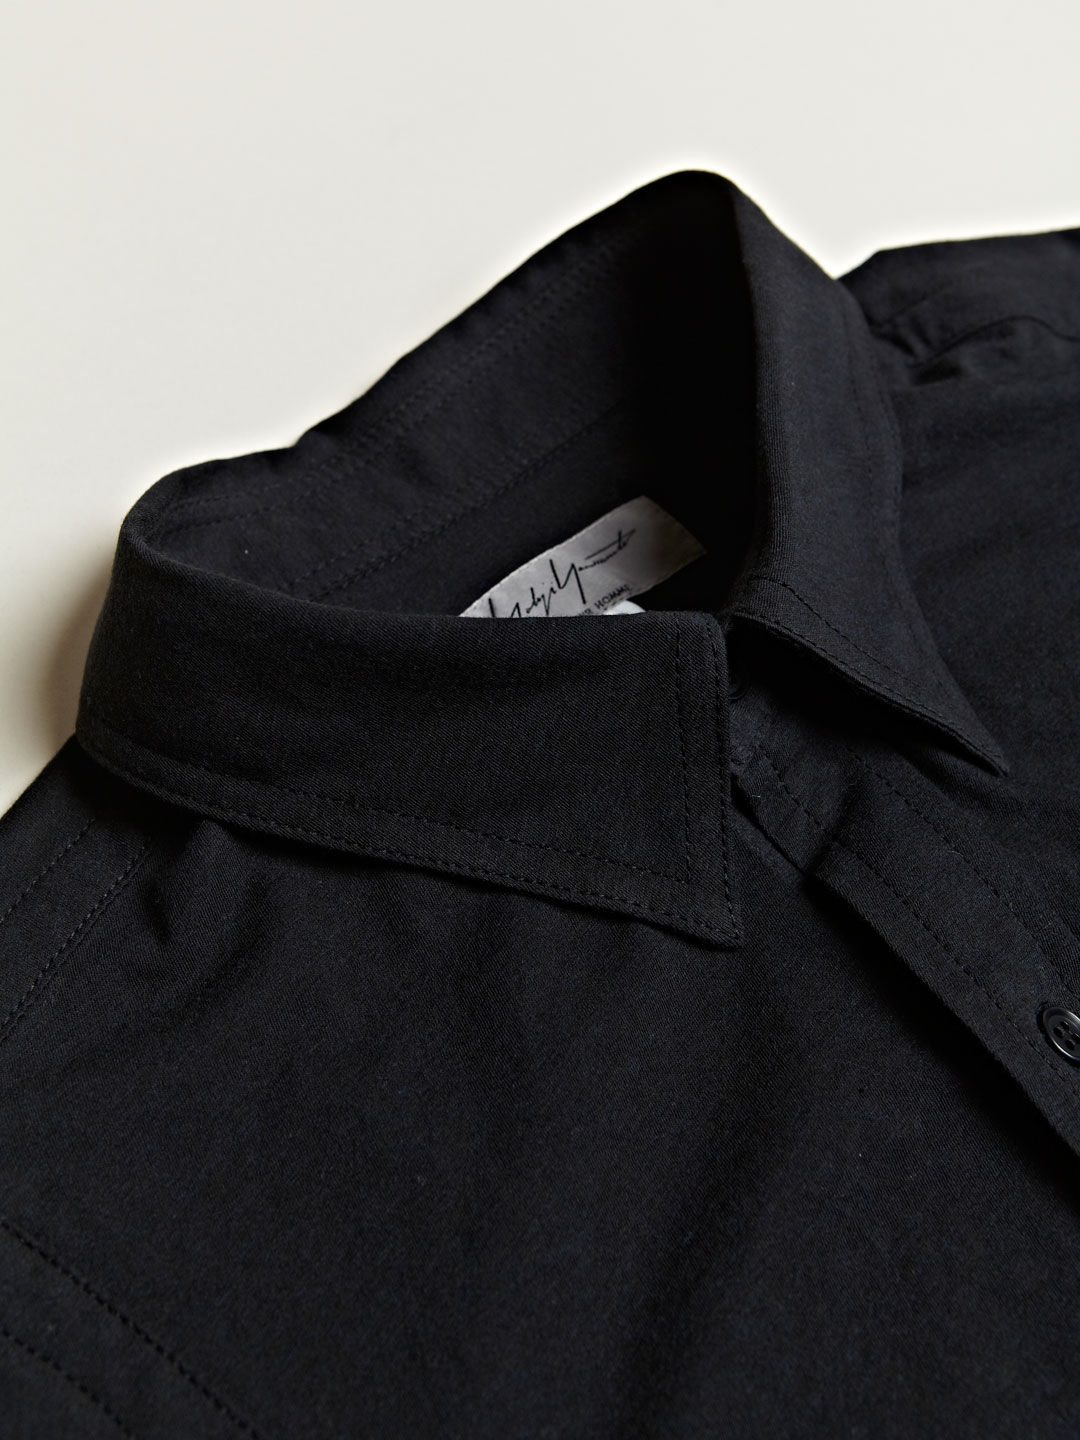 Yohji Yamamoto Pour Homme Mens Plain Jersey Shirt in Black for Men - Lyst